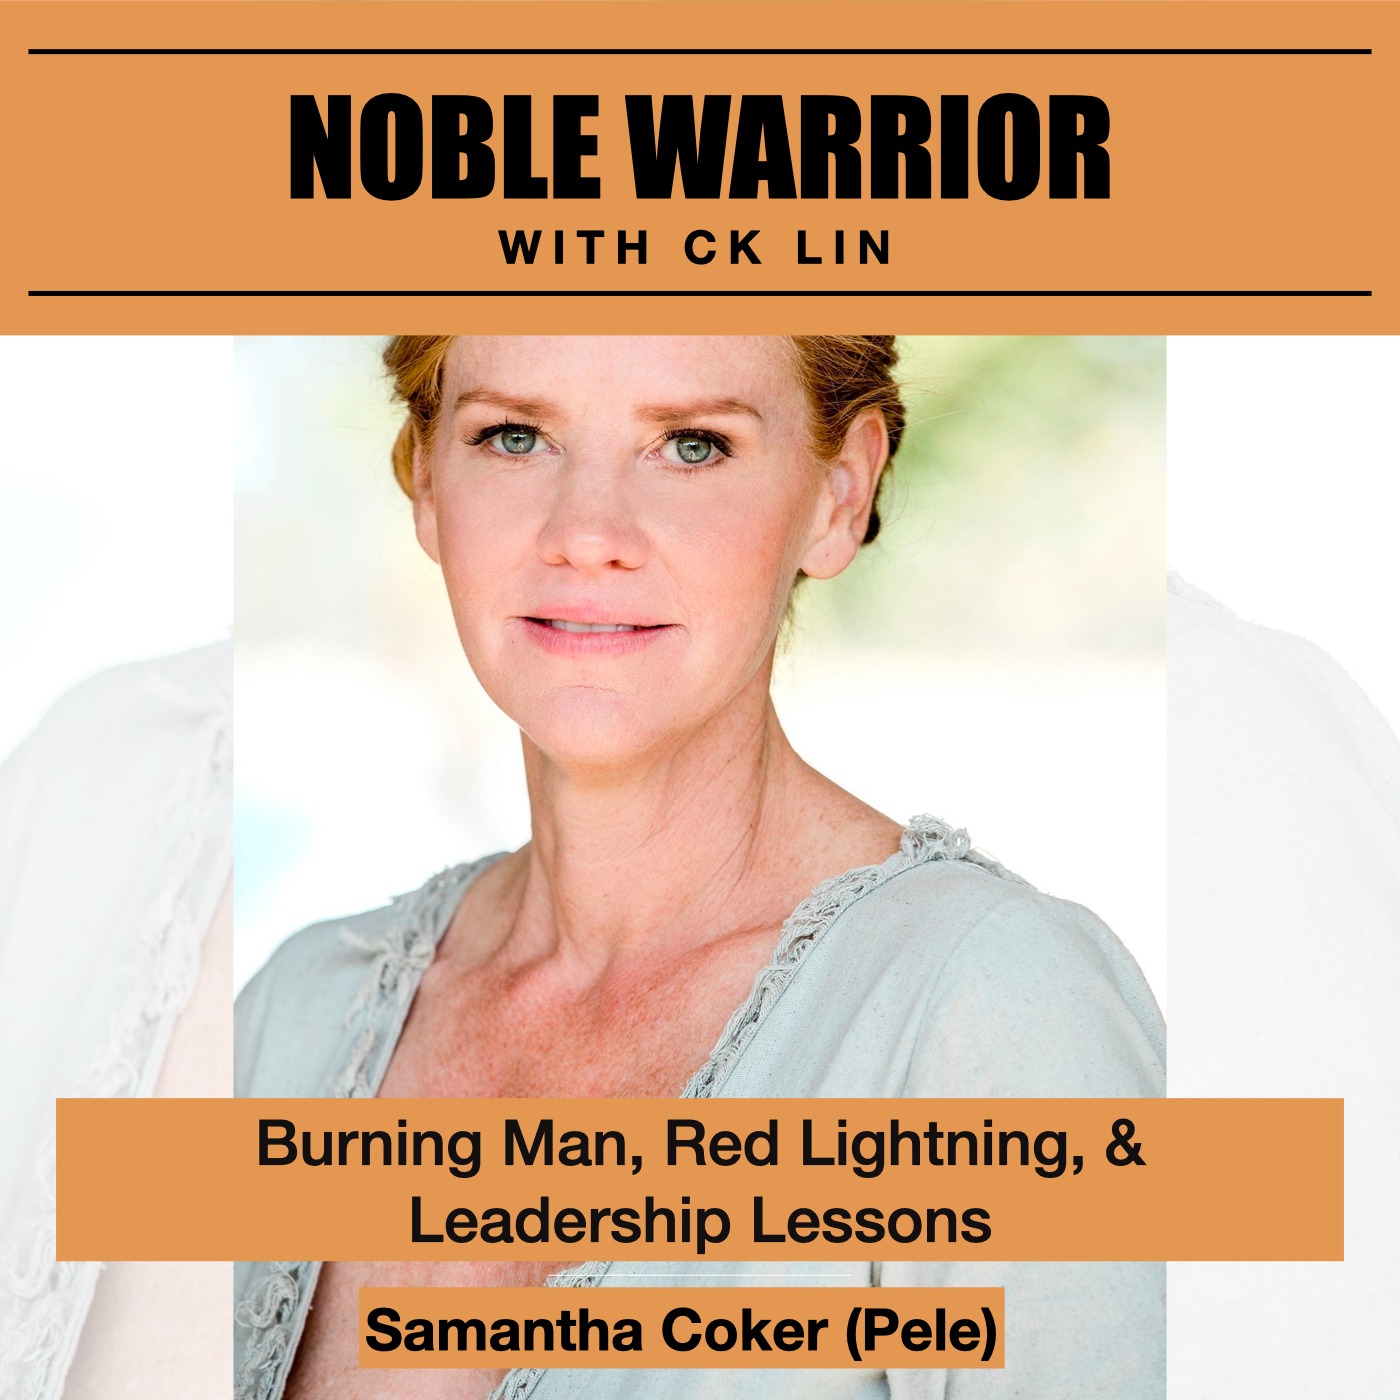 155 Samantha Coker (Pele): Burning Man, Red Lightning, Leadership Lessons Image